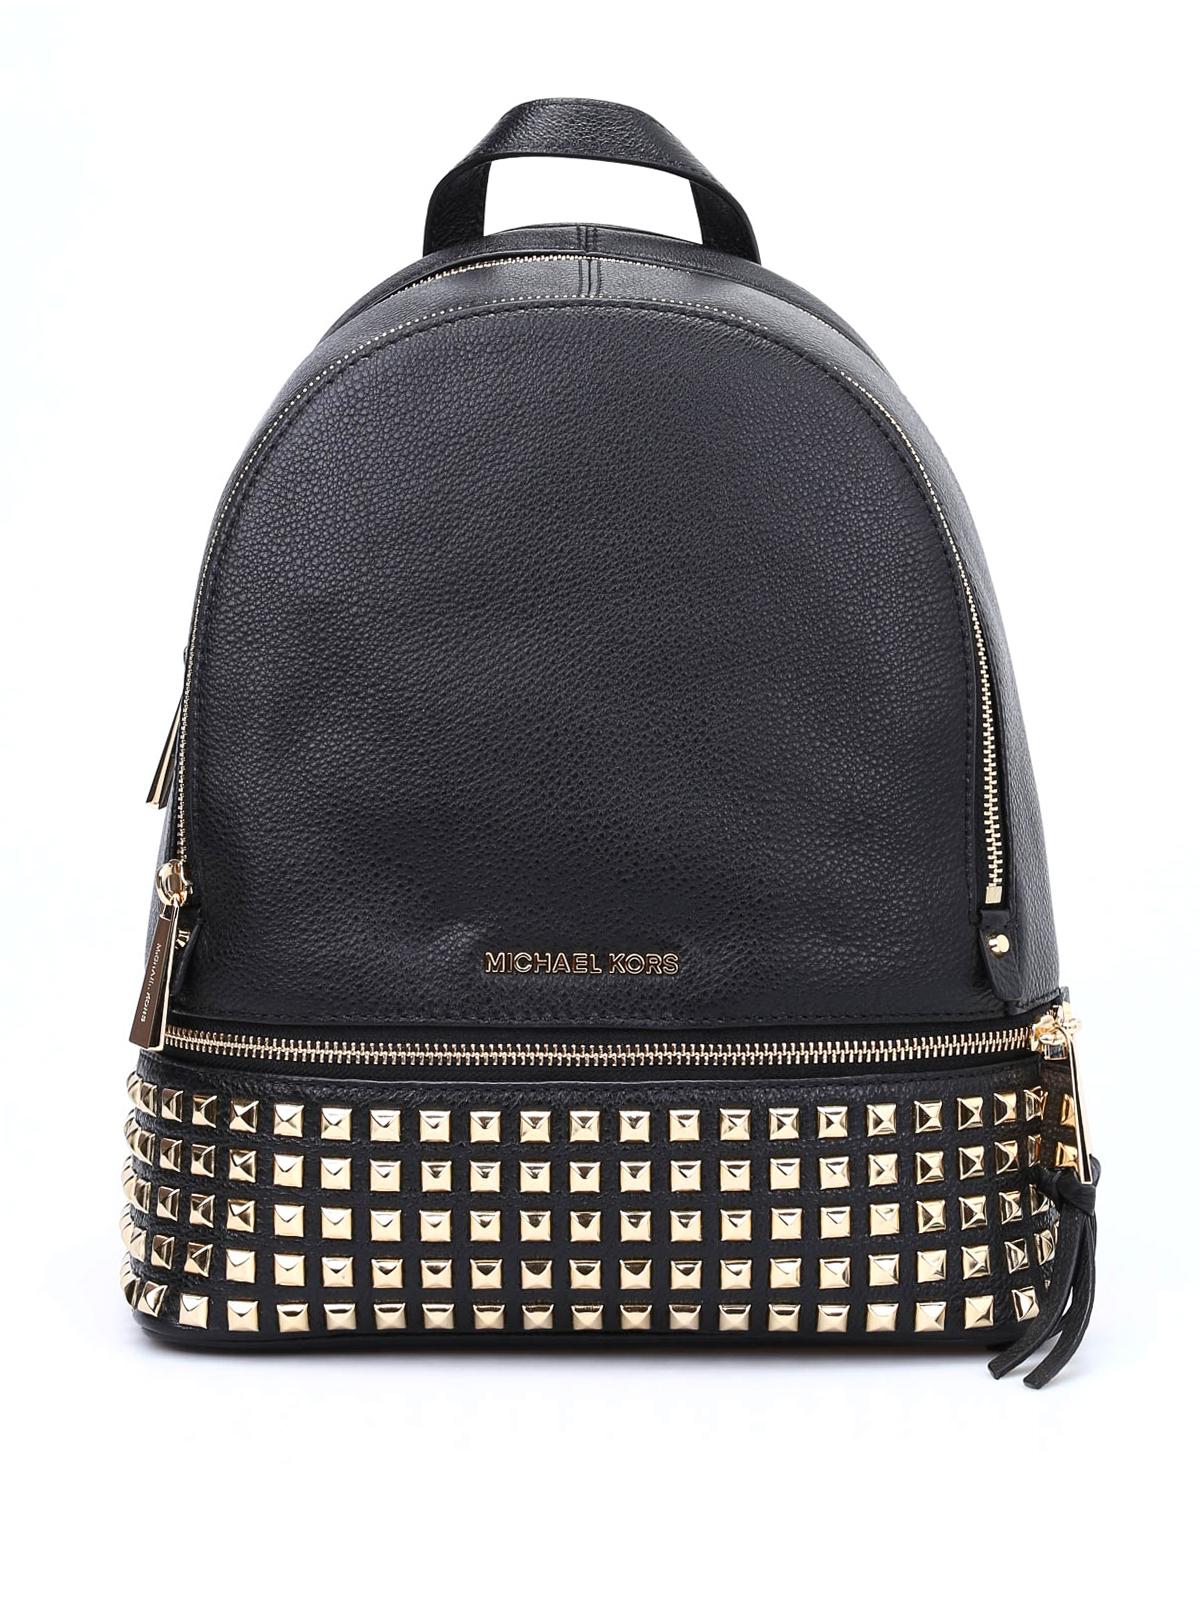 Michael Kors Rhea Medium Studded Pebbled Leather Backpack in Black - Lyst